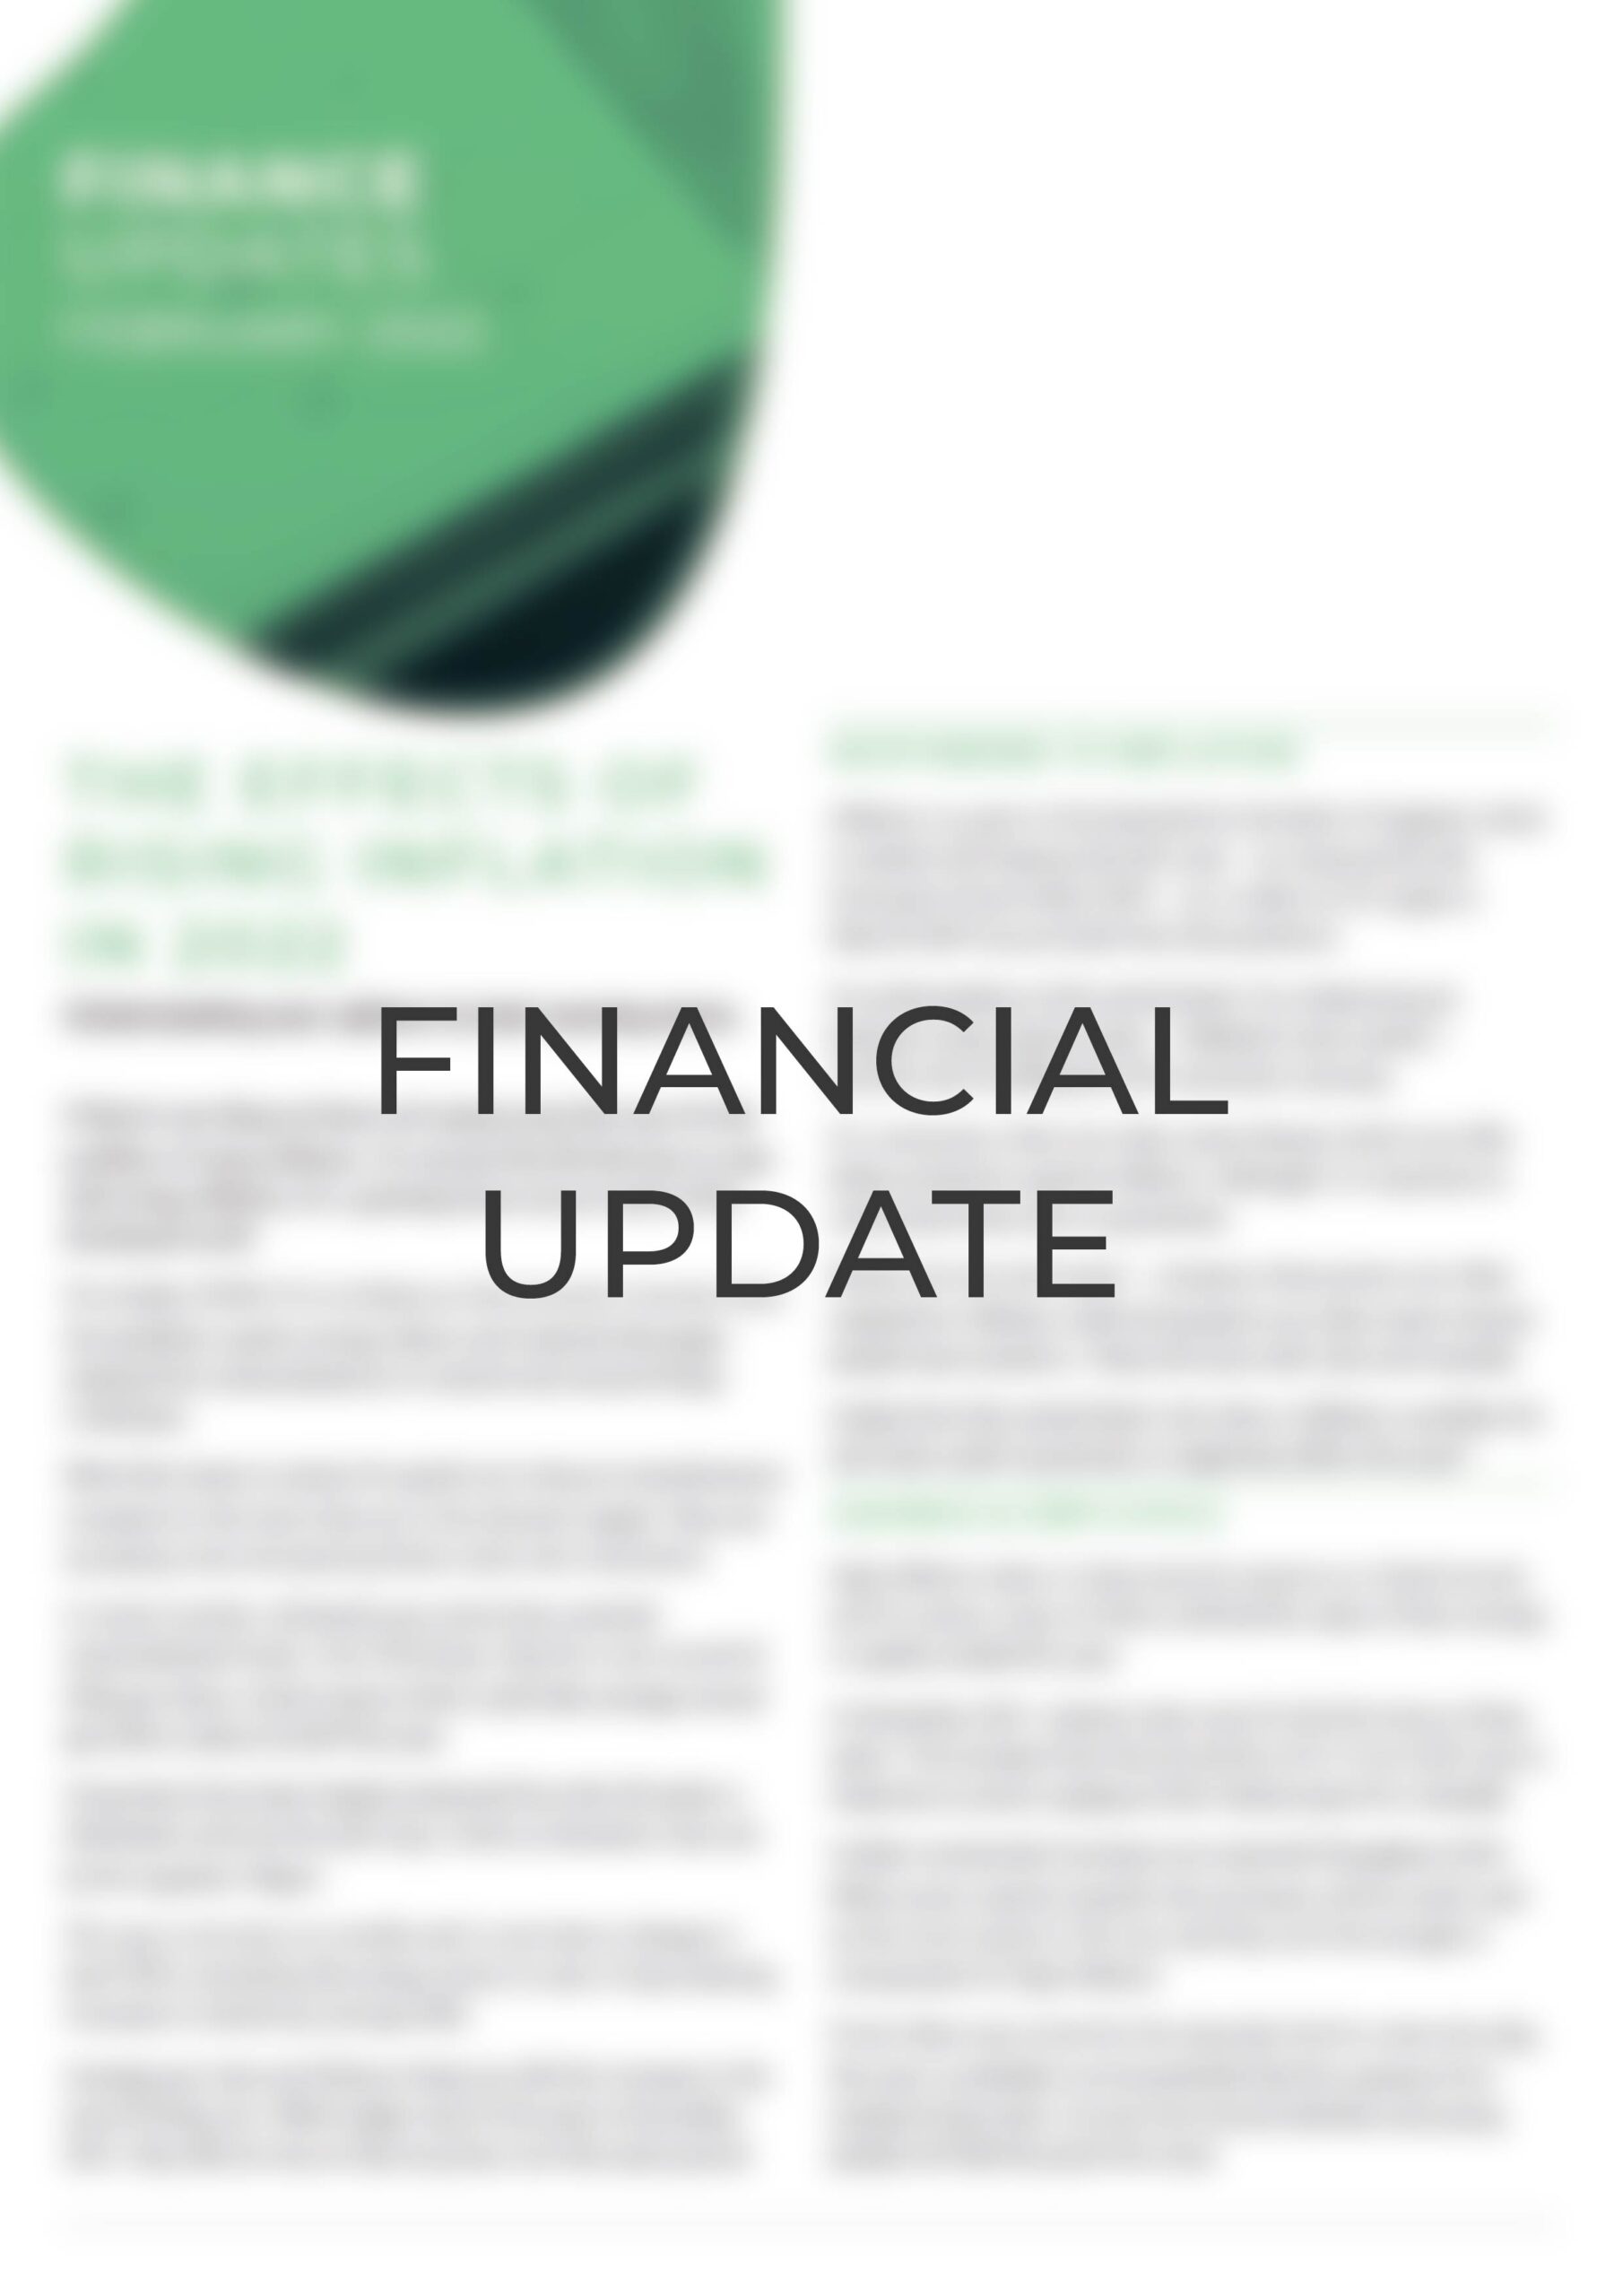 Finance Update - Bonds